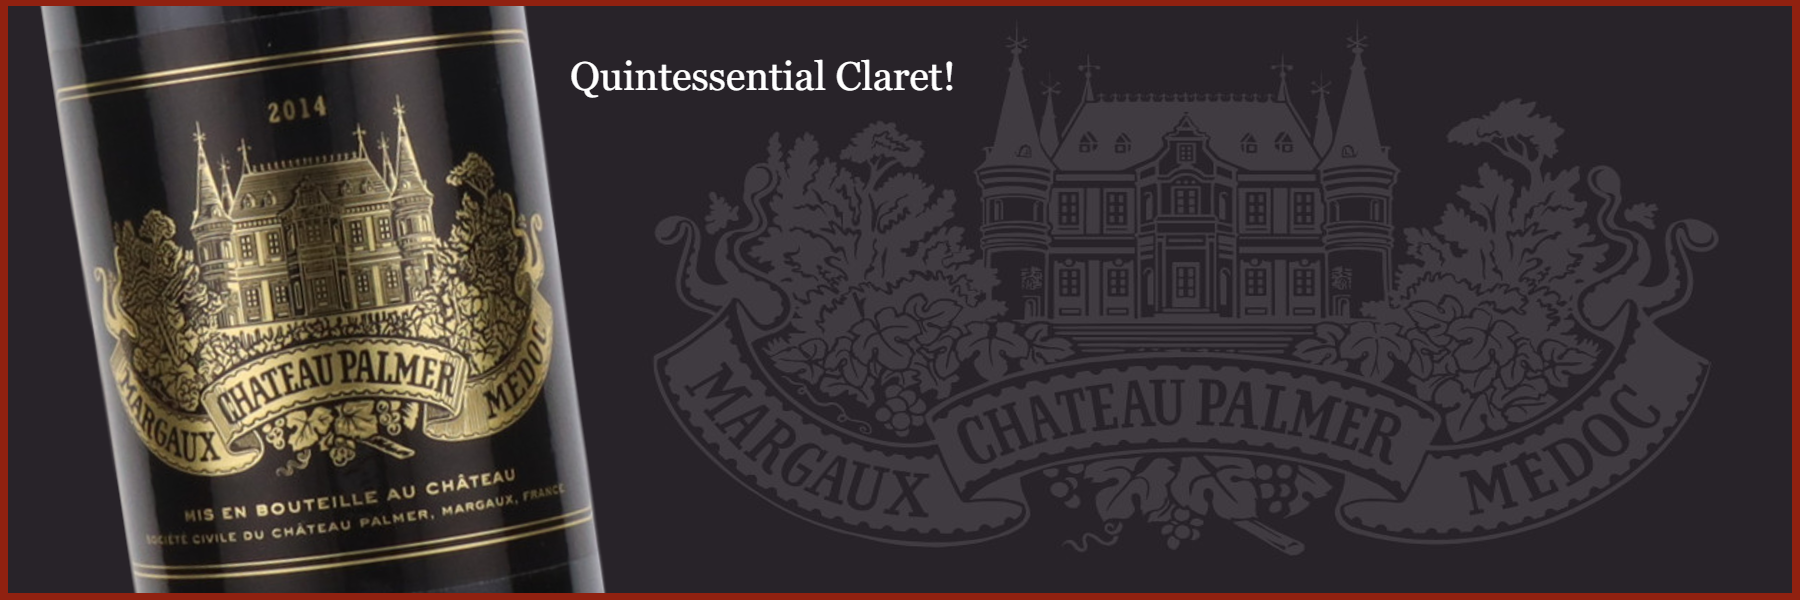 Chateau Palmer - Quintessential Claret!